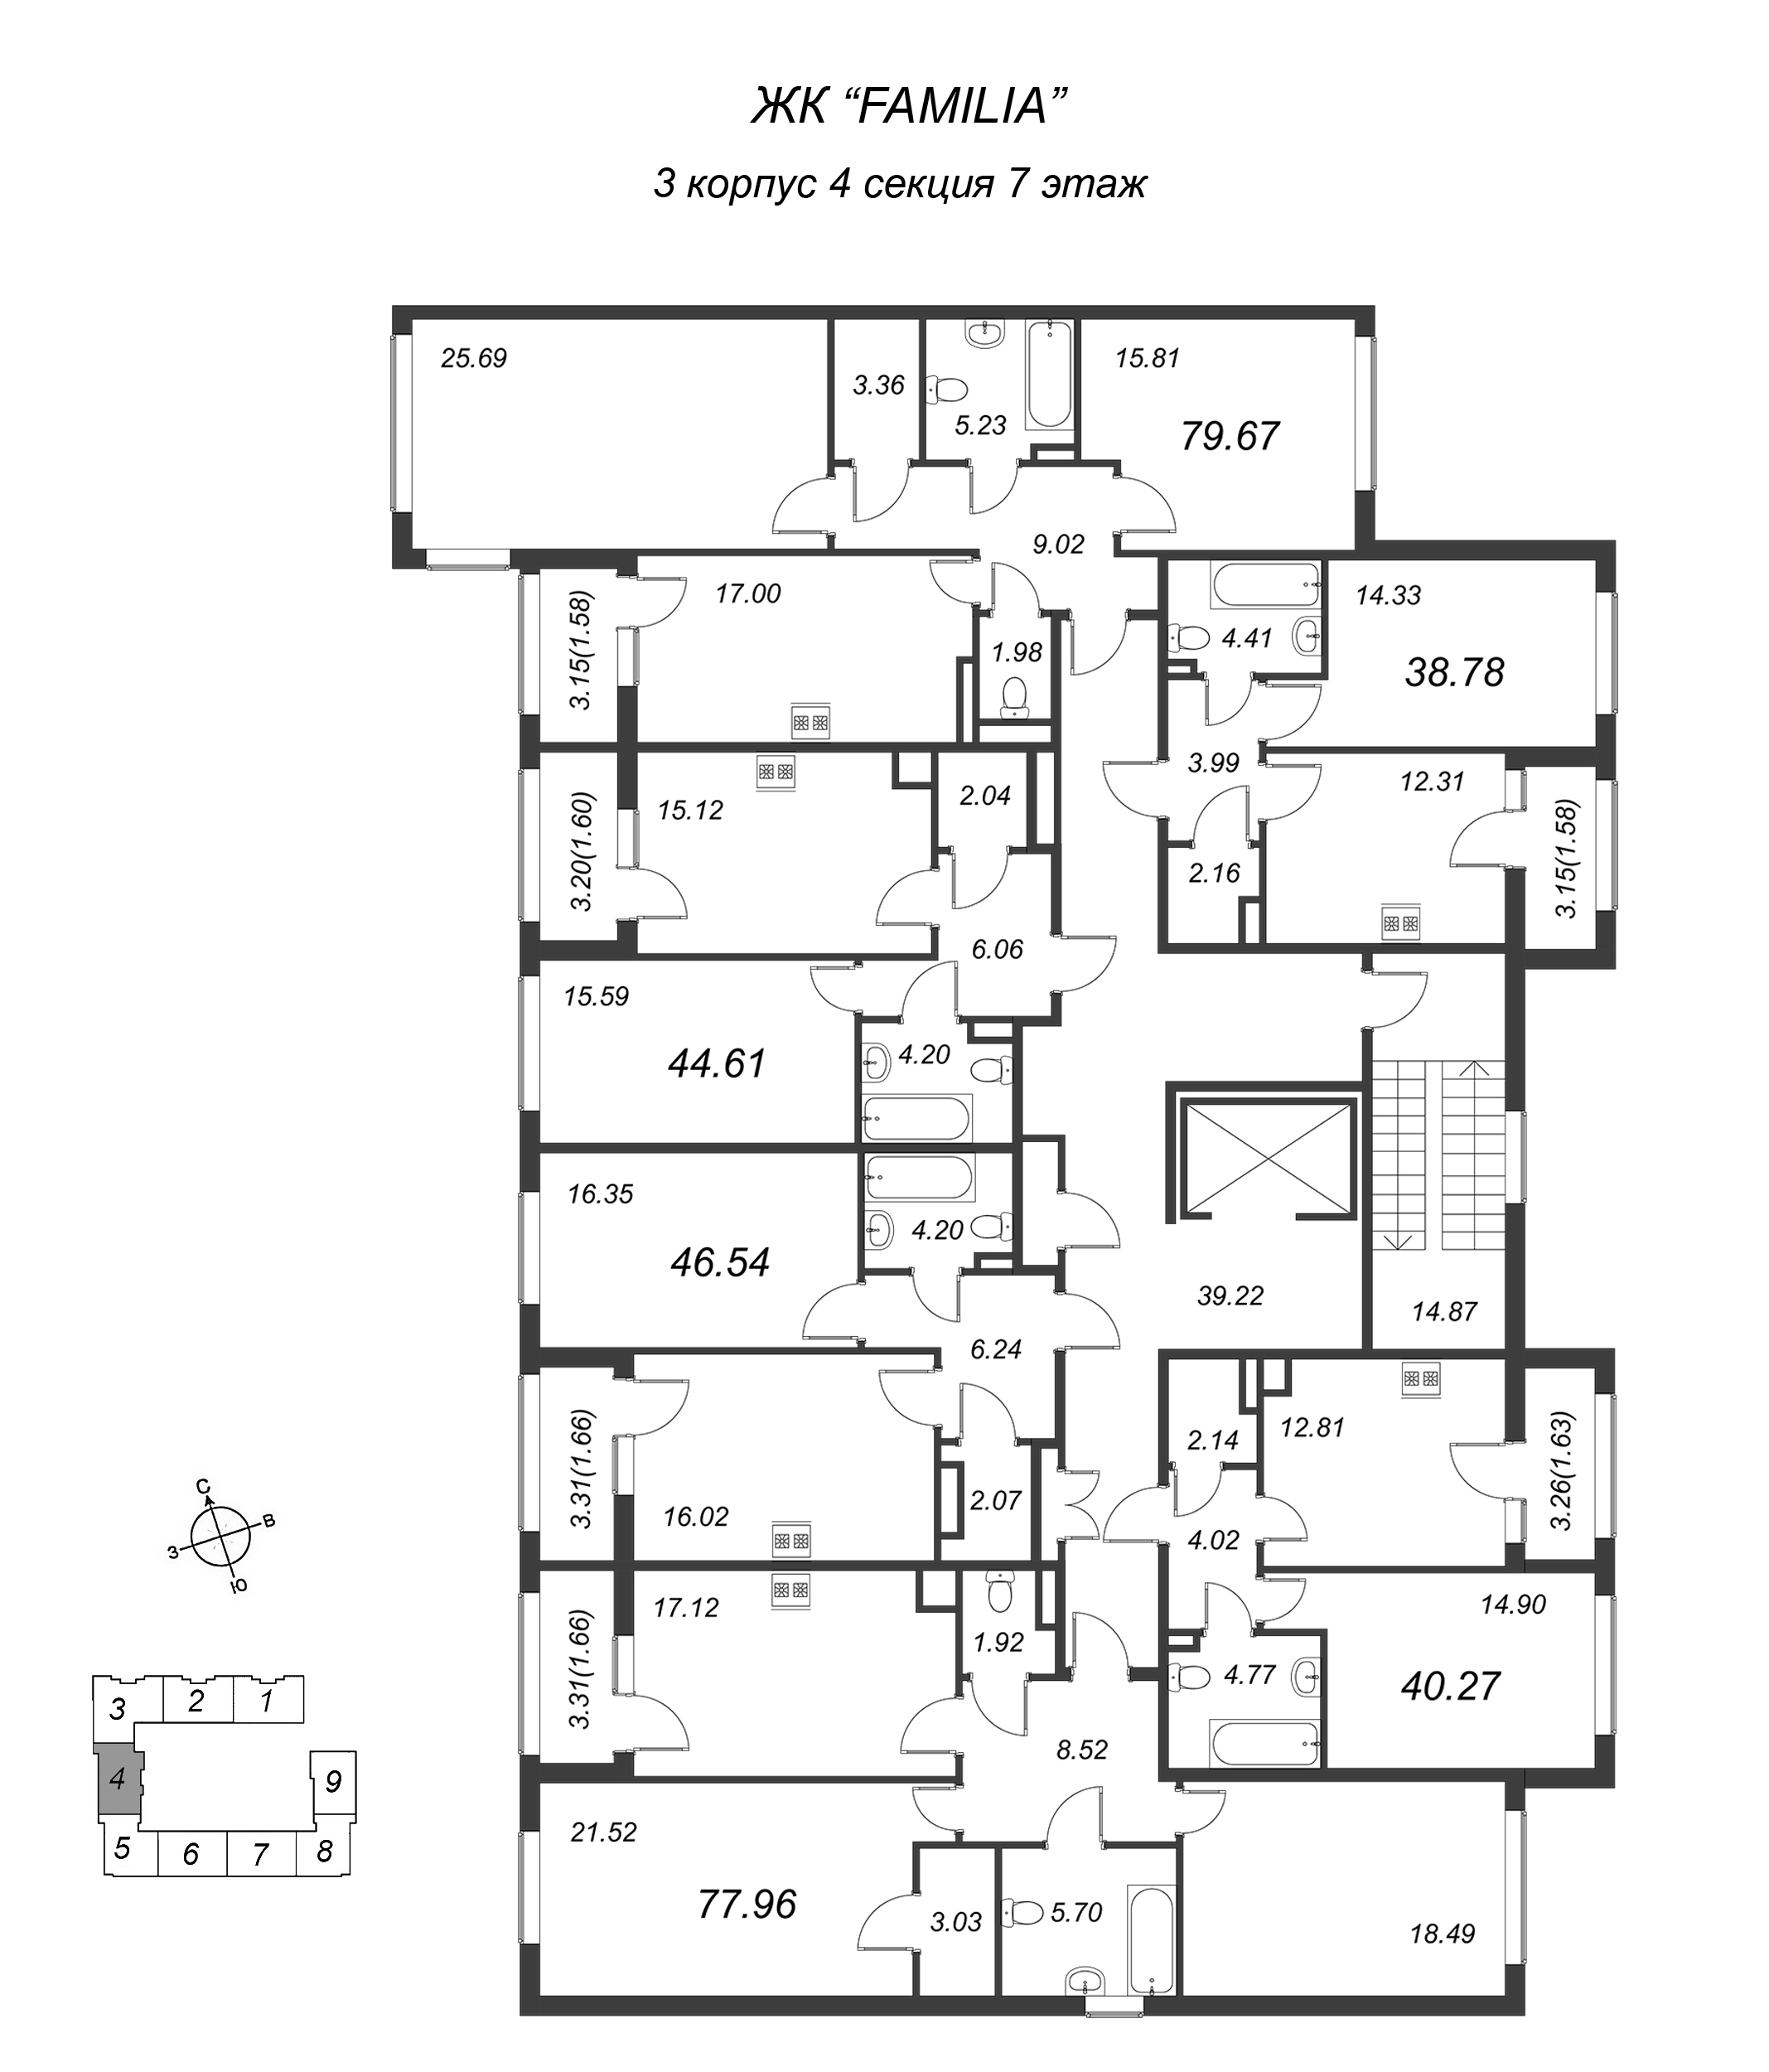 1-комнатная квартира, 38.7 м² в ЖК "FAMILIA" - планировка этажа